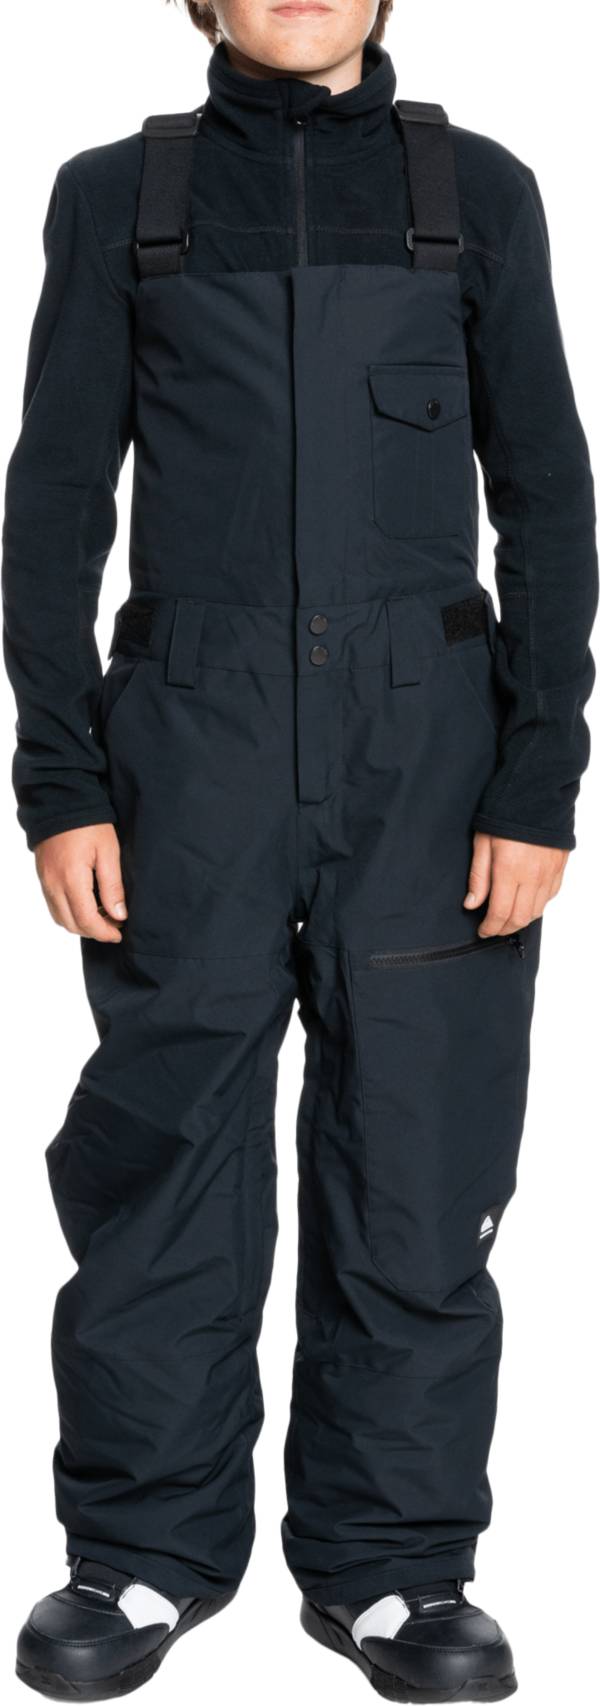 Quicksilver Boys' Utility Snow Bib Pants product image